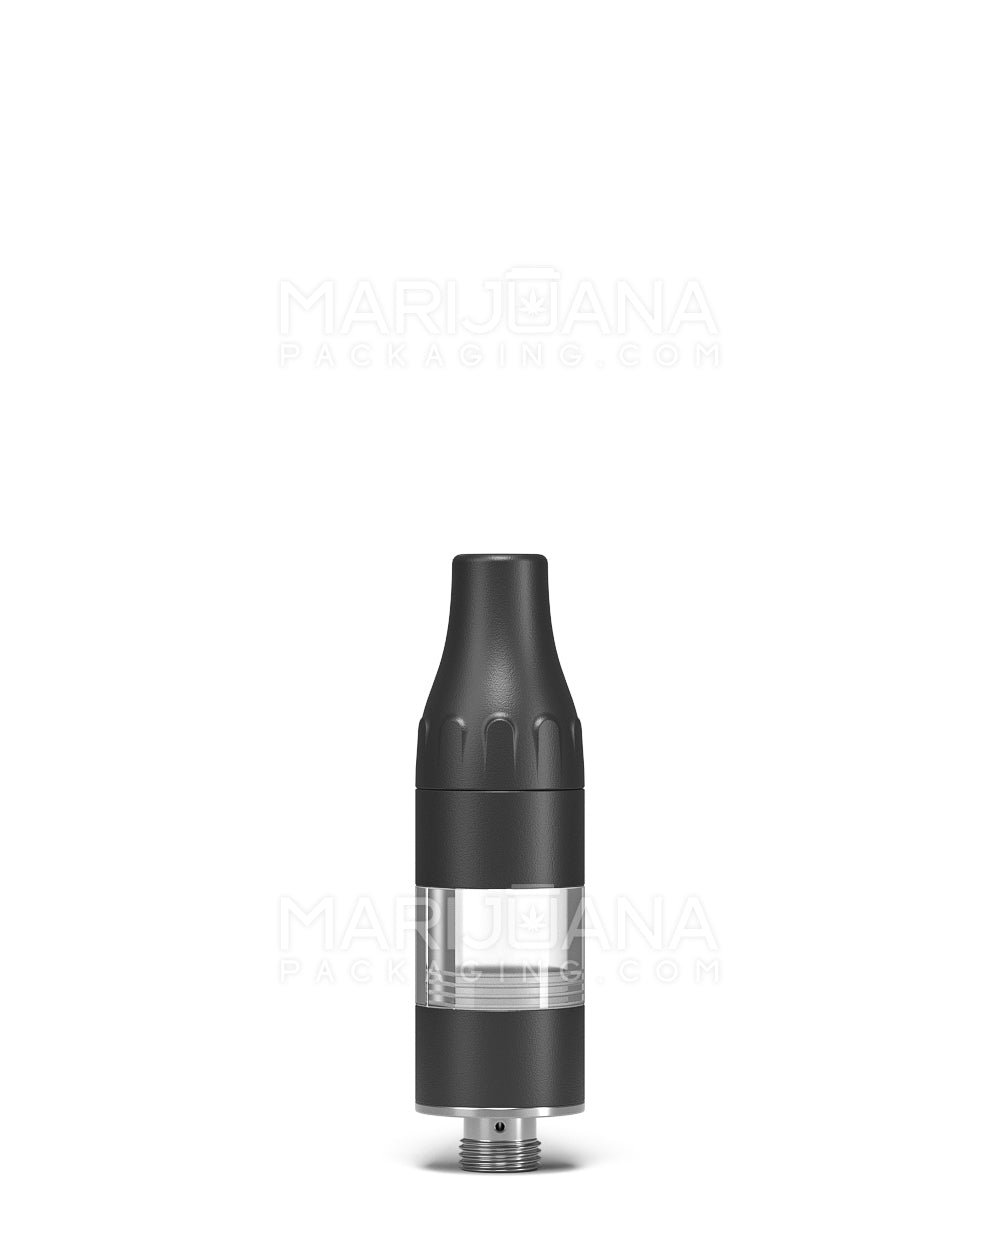 RAE | Nova Ultra Core Postless & Apertureless Glass Vape Cartridge | 0.5mL - Arbor Press - 100 Count - 1